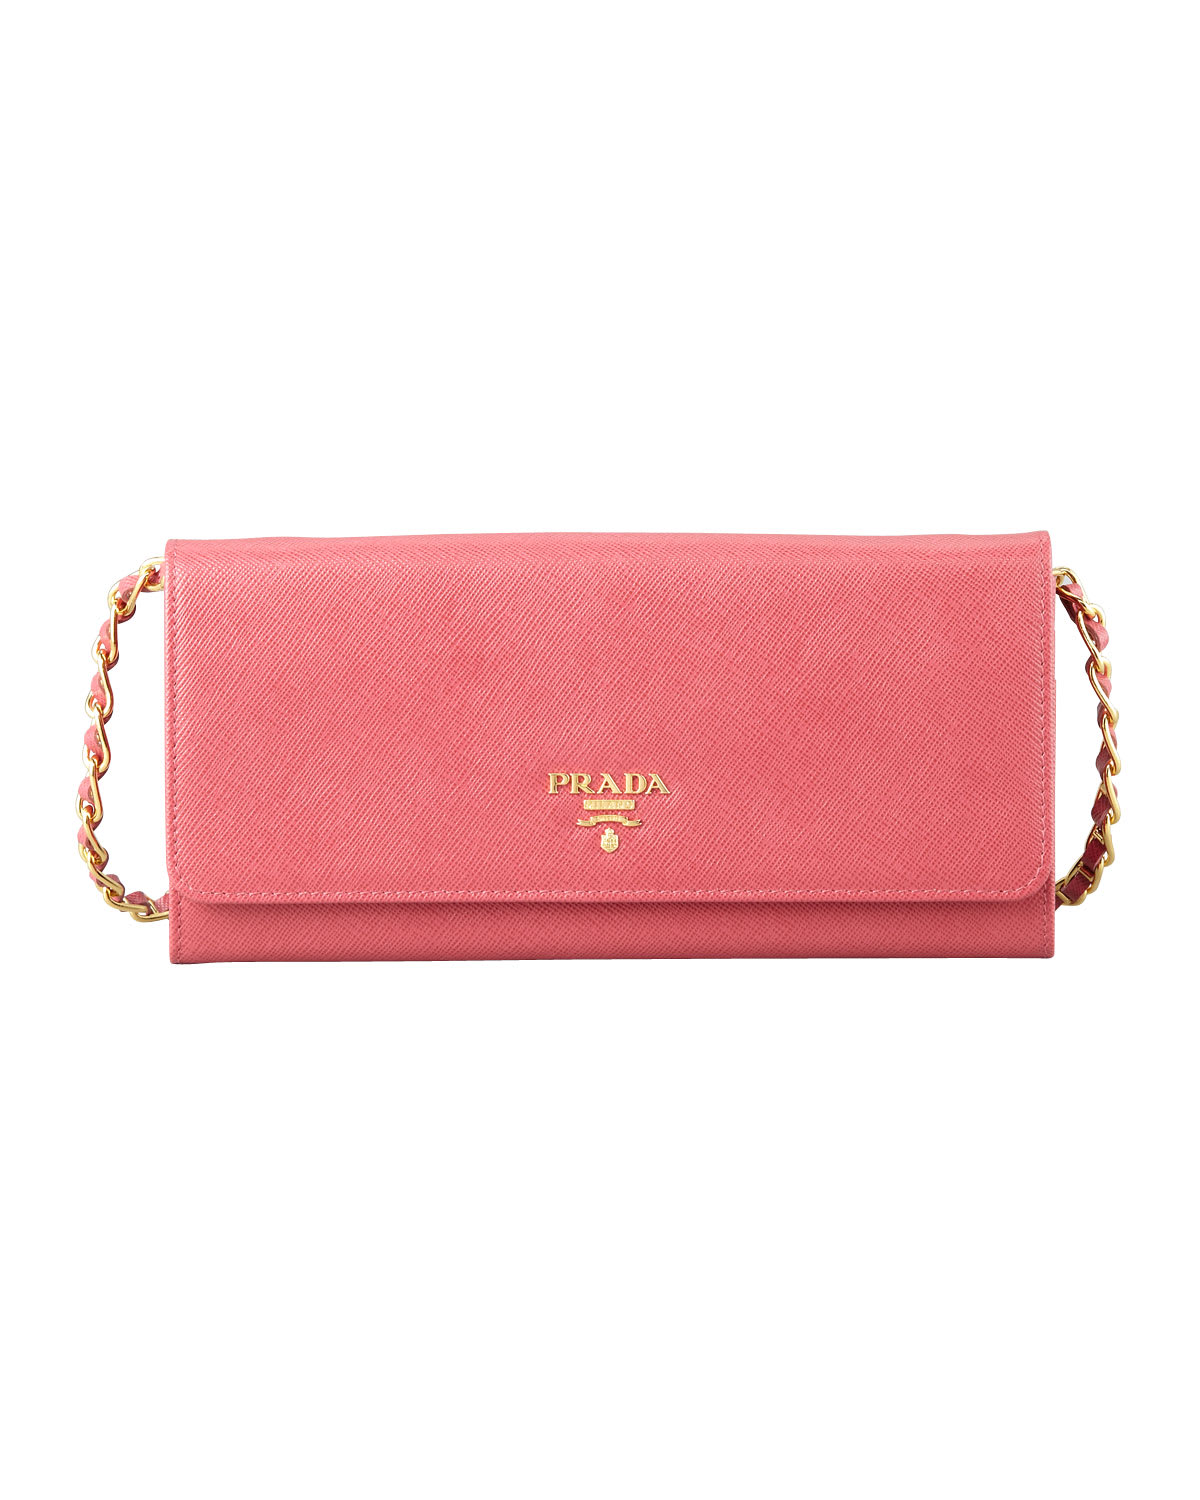 Prada Saffiano Leather Wallet with Shoulder Strap - Bergdorf Goodman